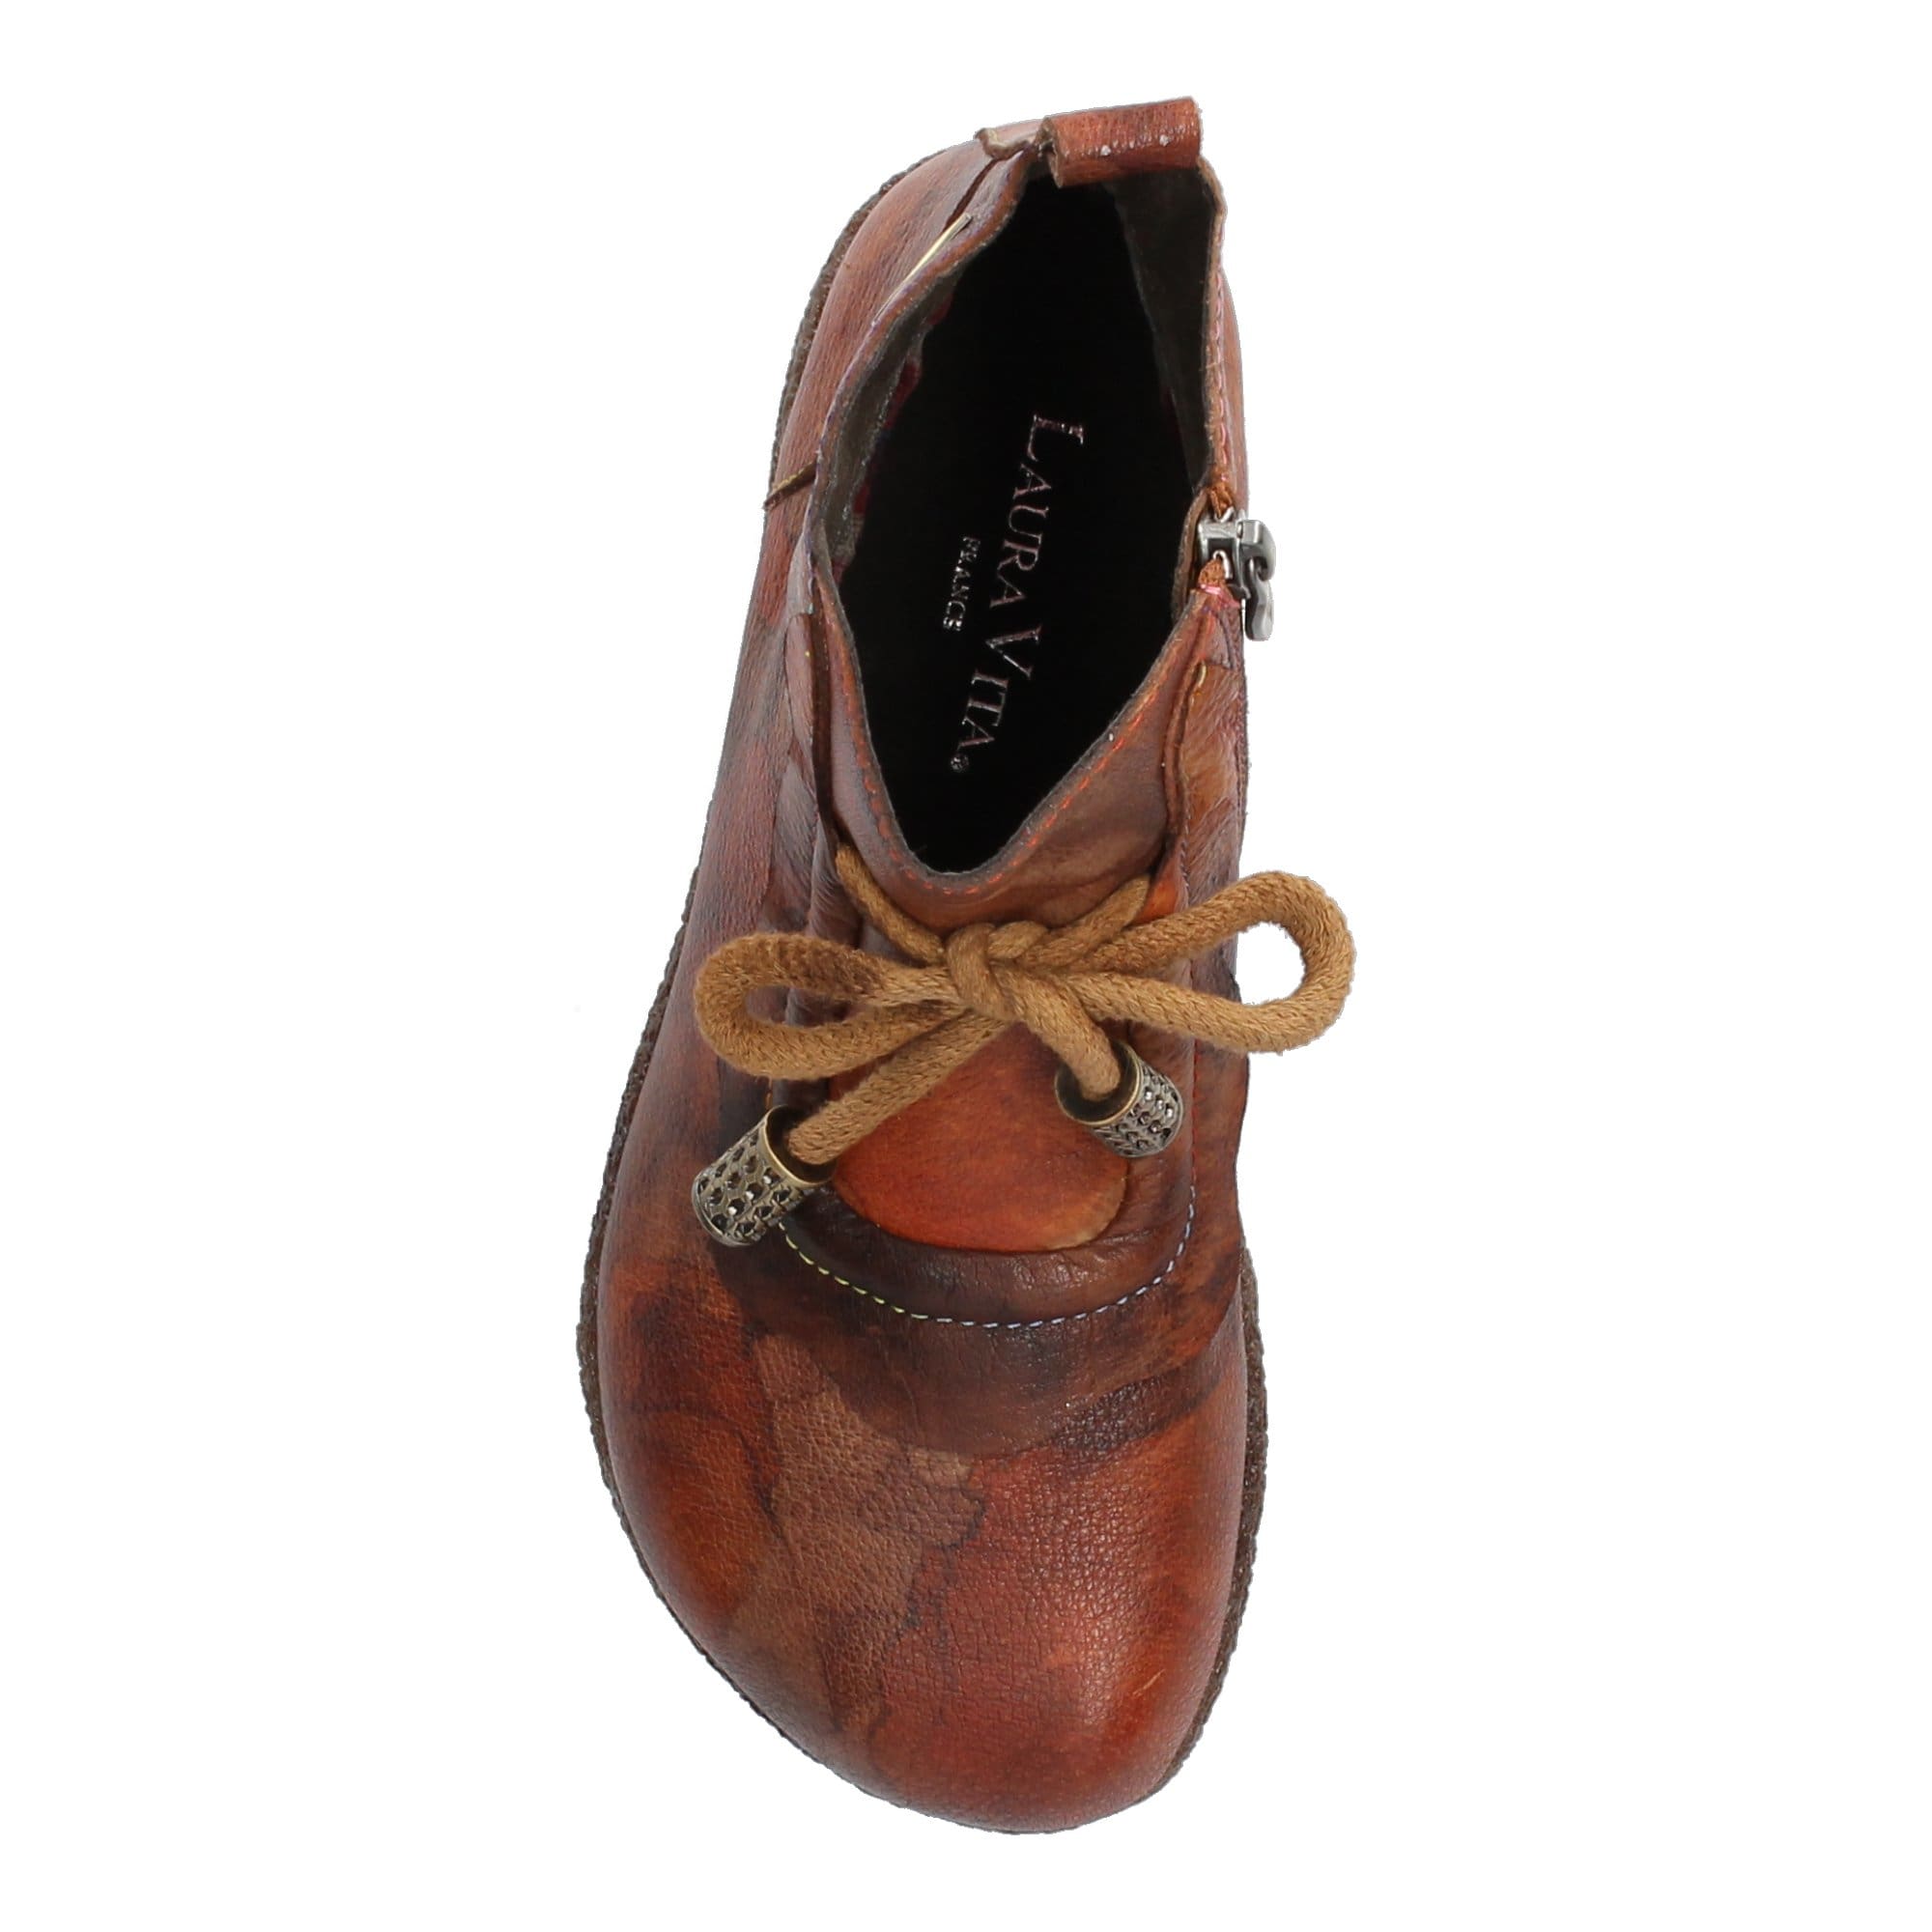 Shoe GOCNO 215 - Boots